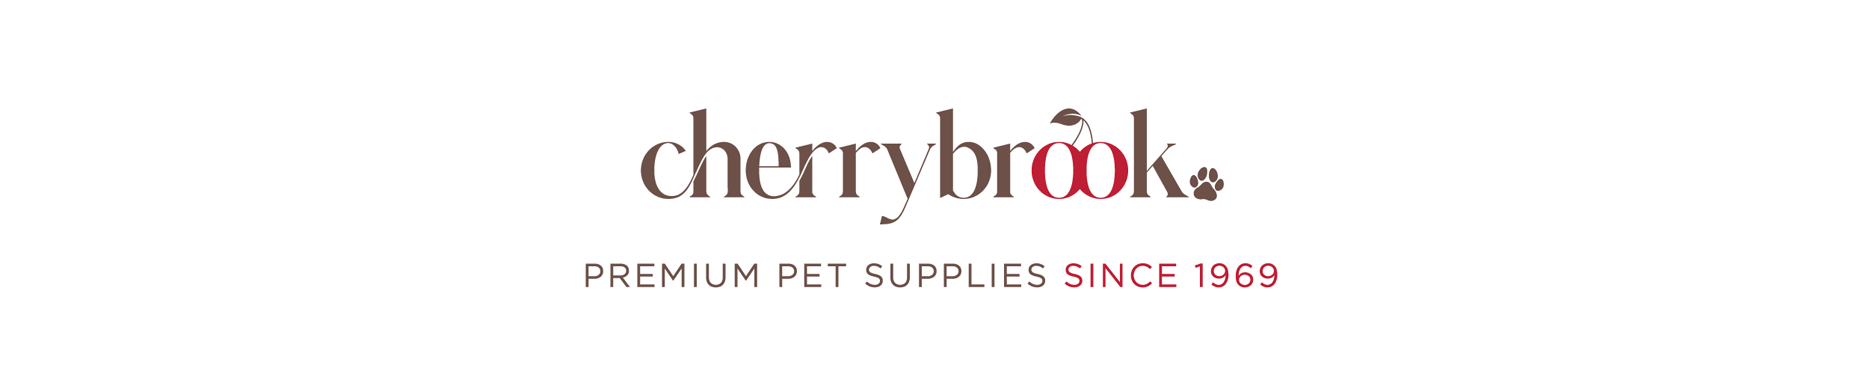 Cherrybrook Premium Pet Supplies established 1969